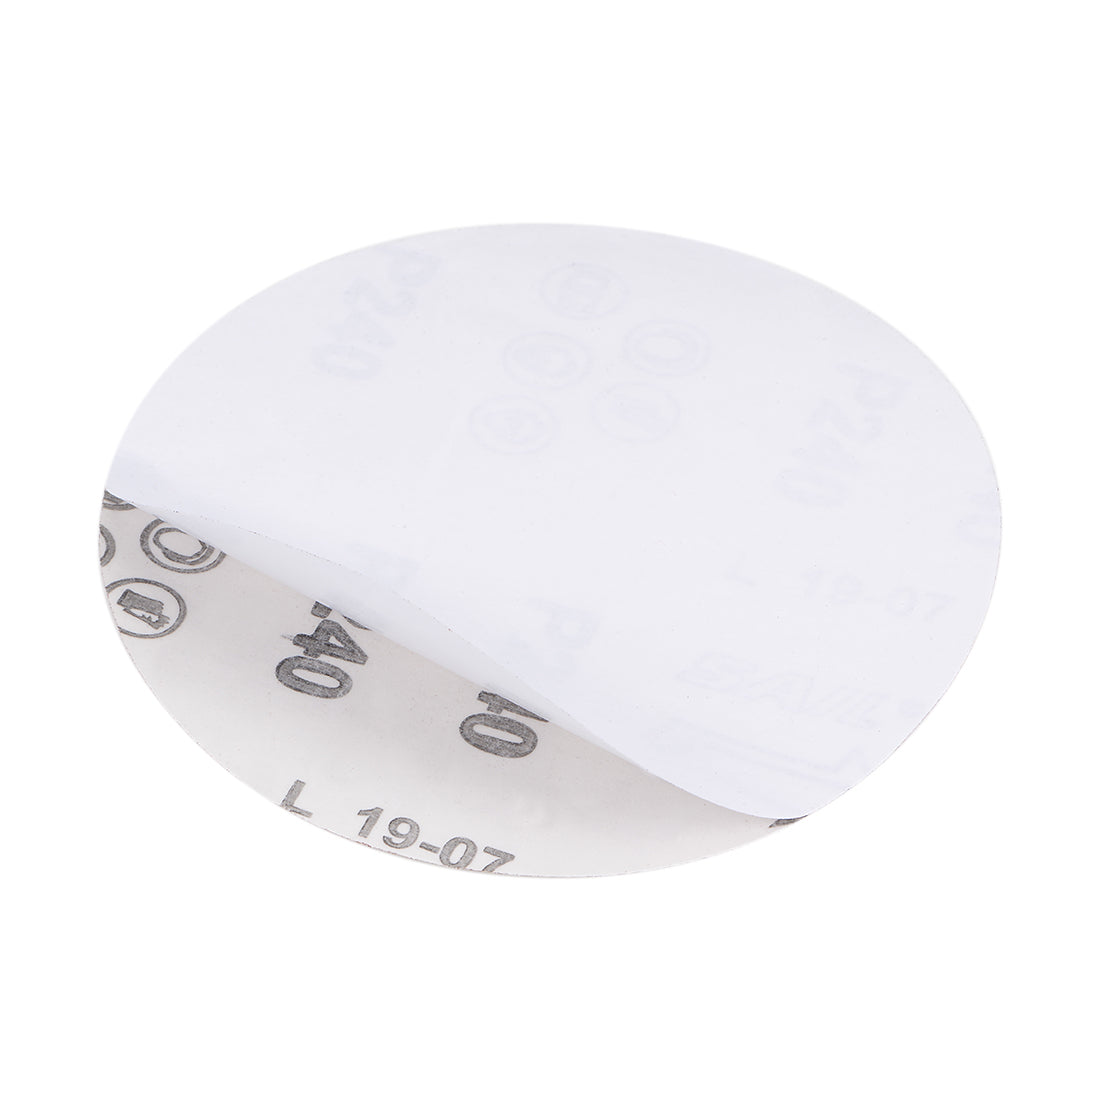 uxcell Uxcell 5-Inch PSA Sanding Disc Aluminum Oxide Adhesive Back Sandpaper 240 Grit 15 Pcs